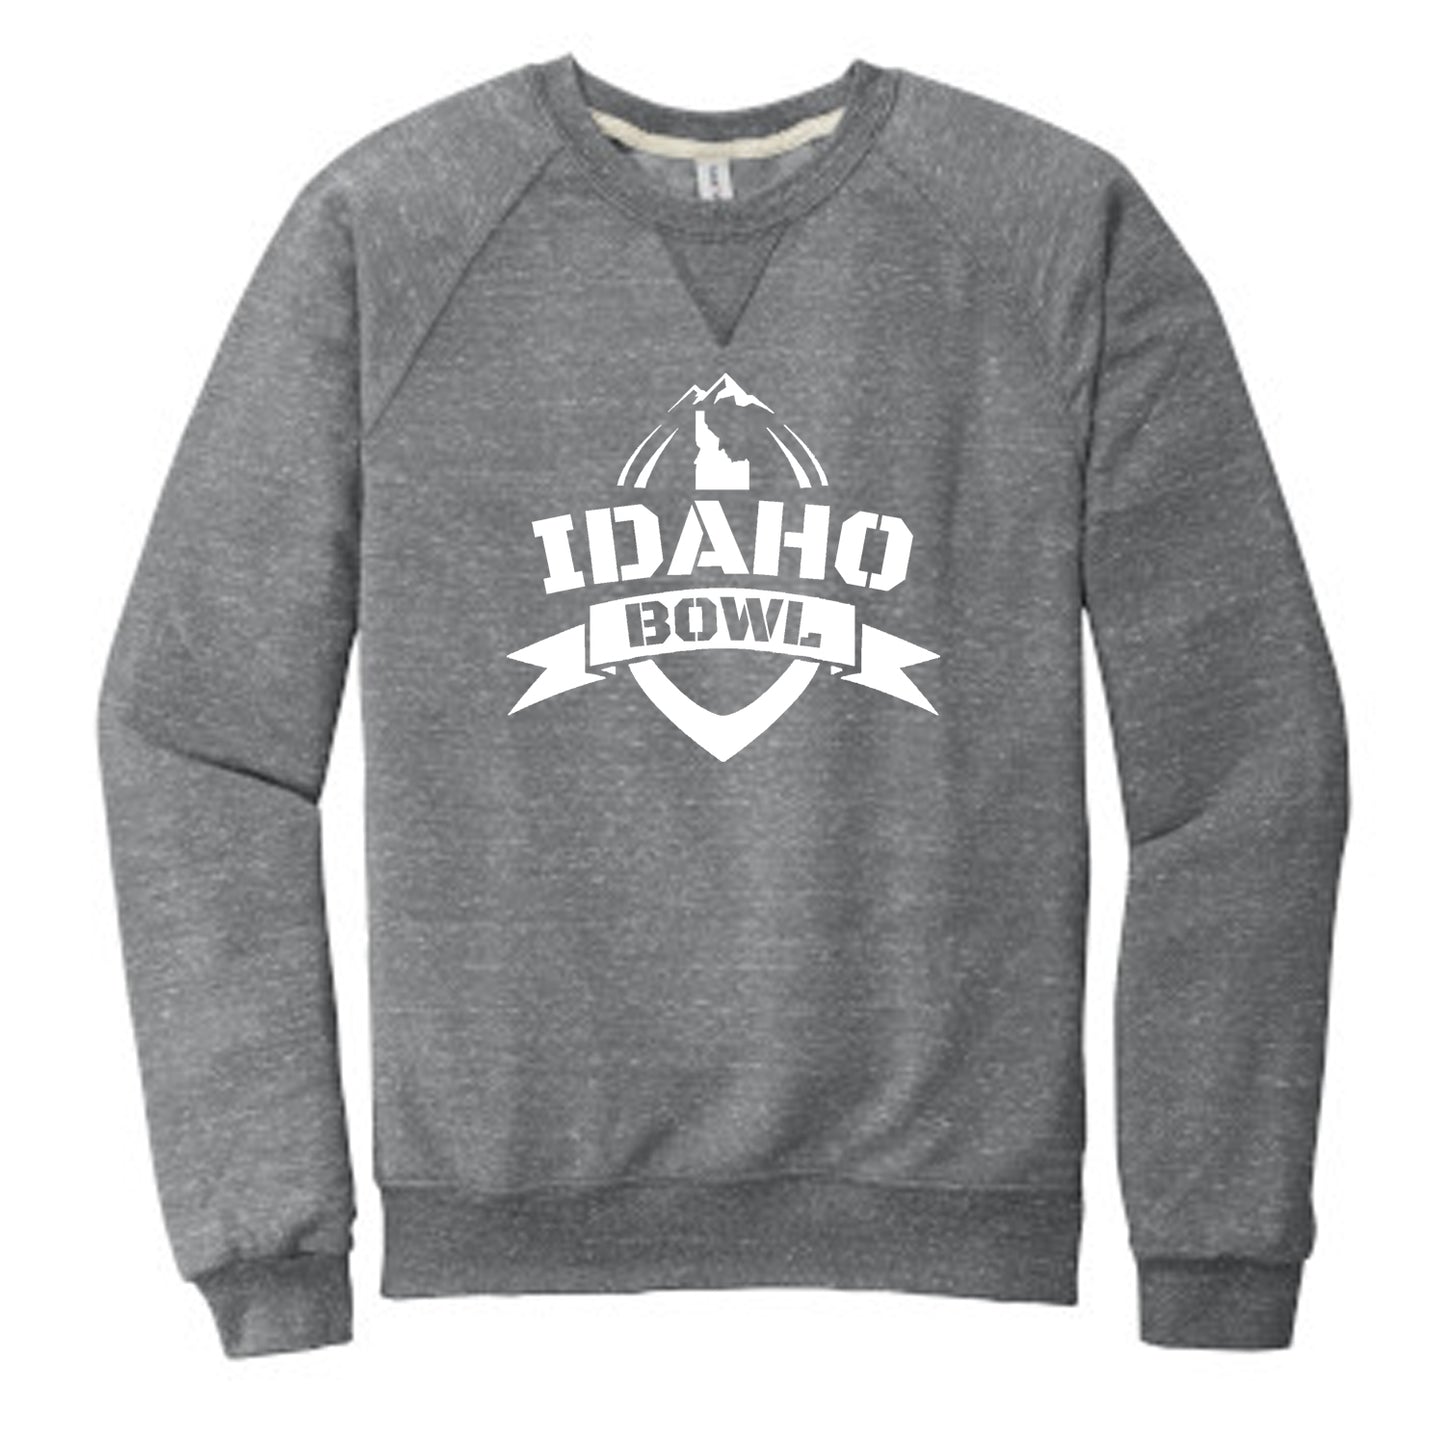 Idaho Bowl - Men's Raglan Crew Sweatshirt - 4 color options